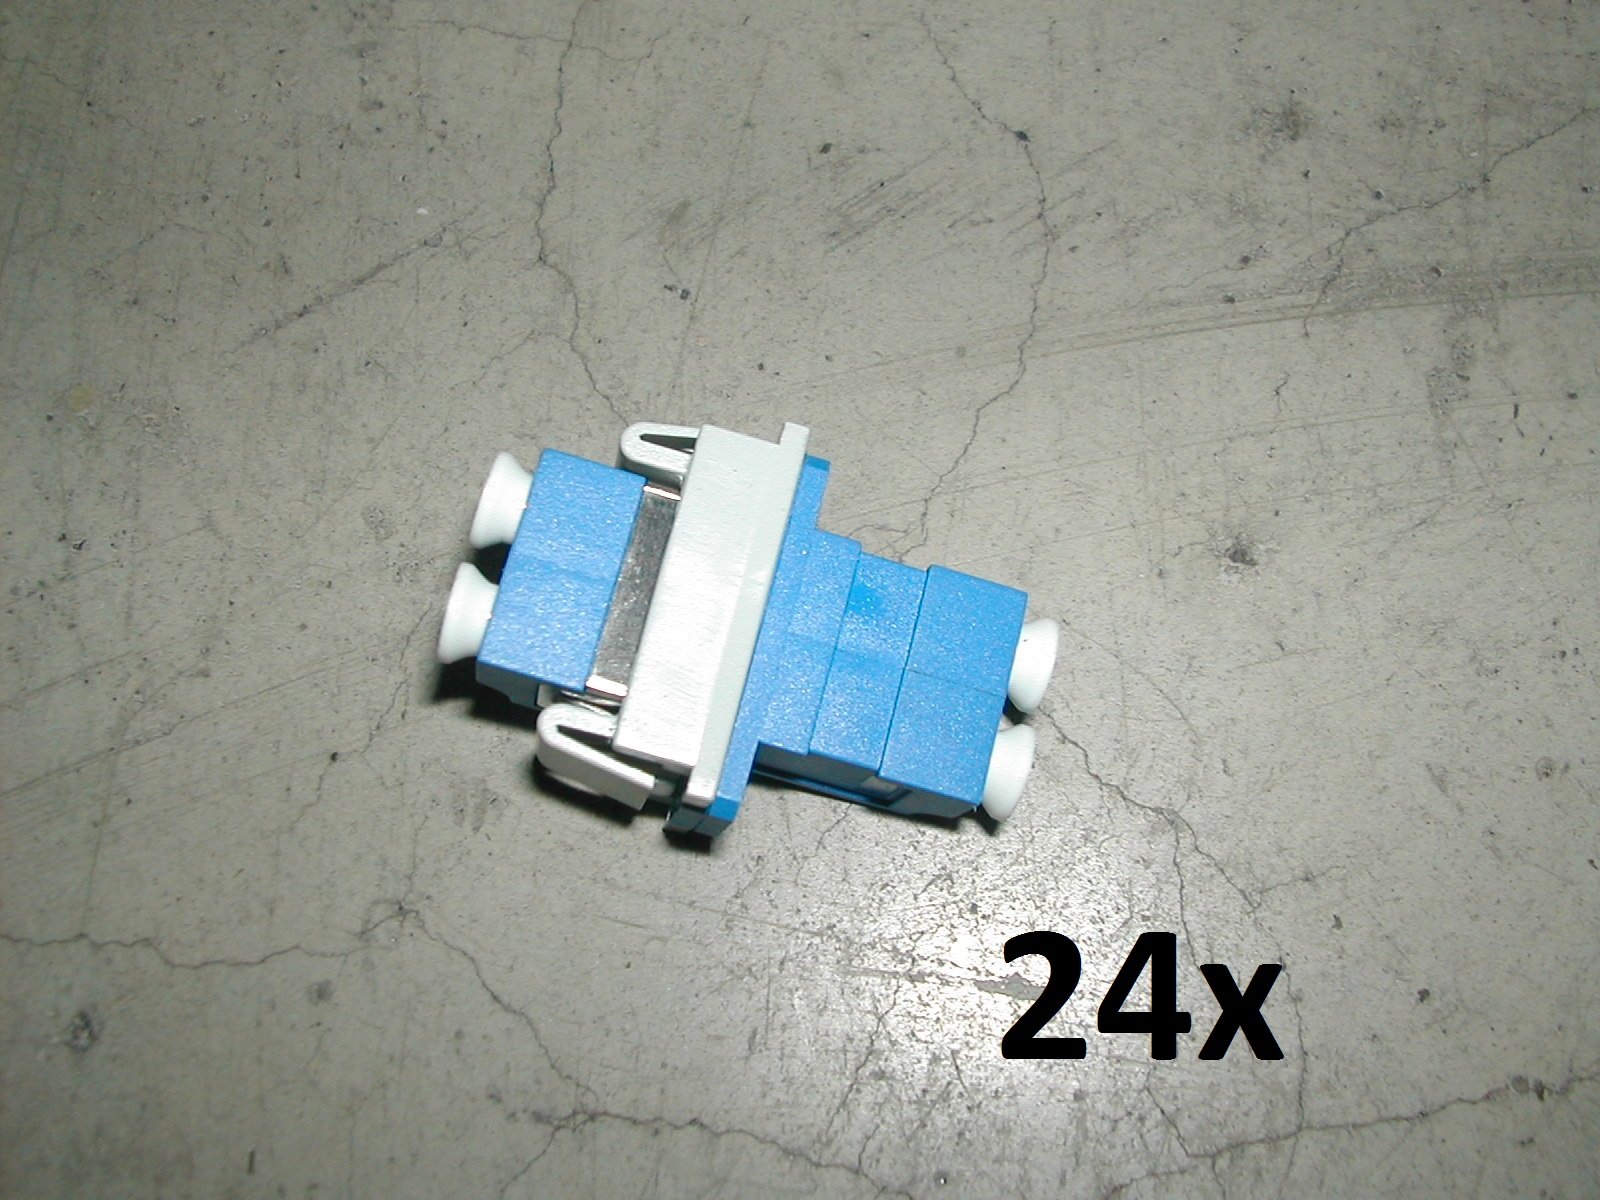 OC-ADK-L1-L1-NNCD-(24)    
LC SM Adapter + retainer   
Duplex                        
24 stuks/verpakking           
Art. CC3535-000